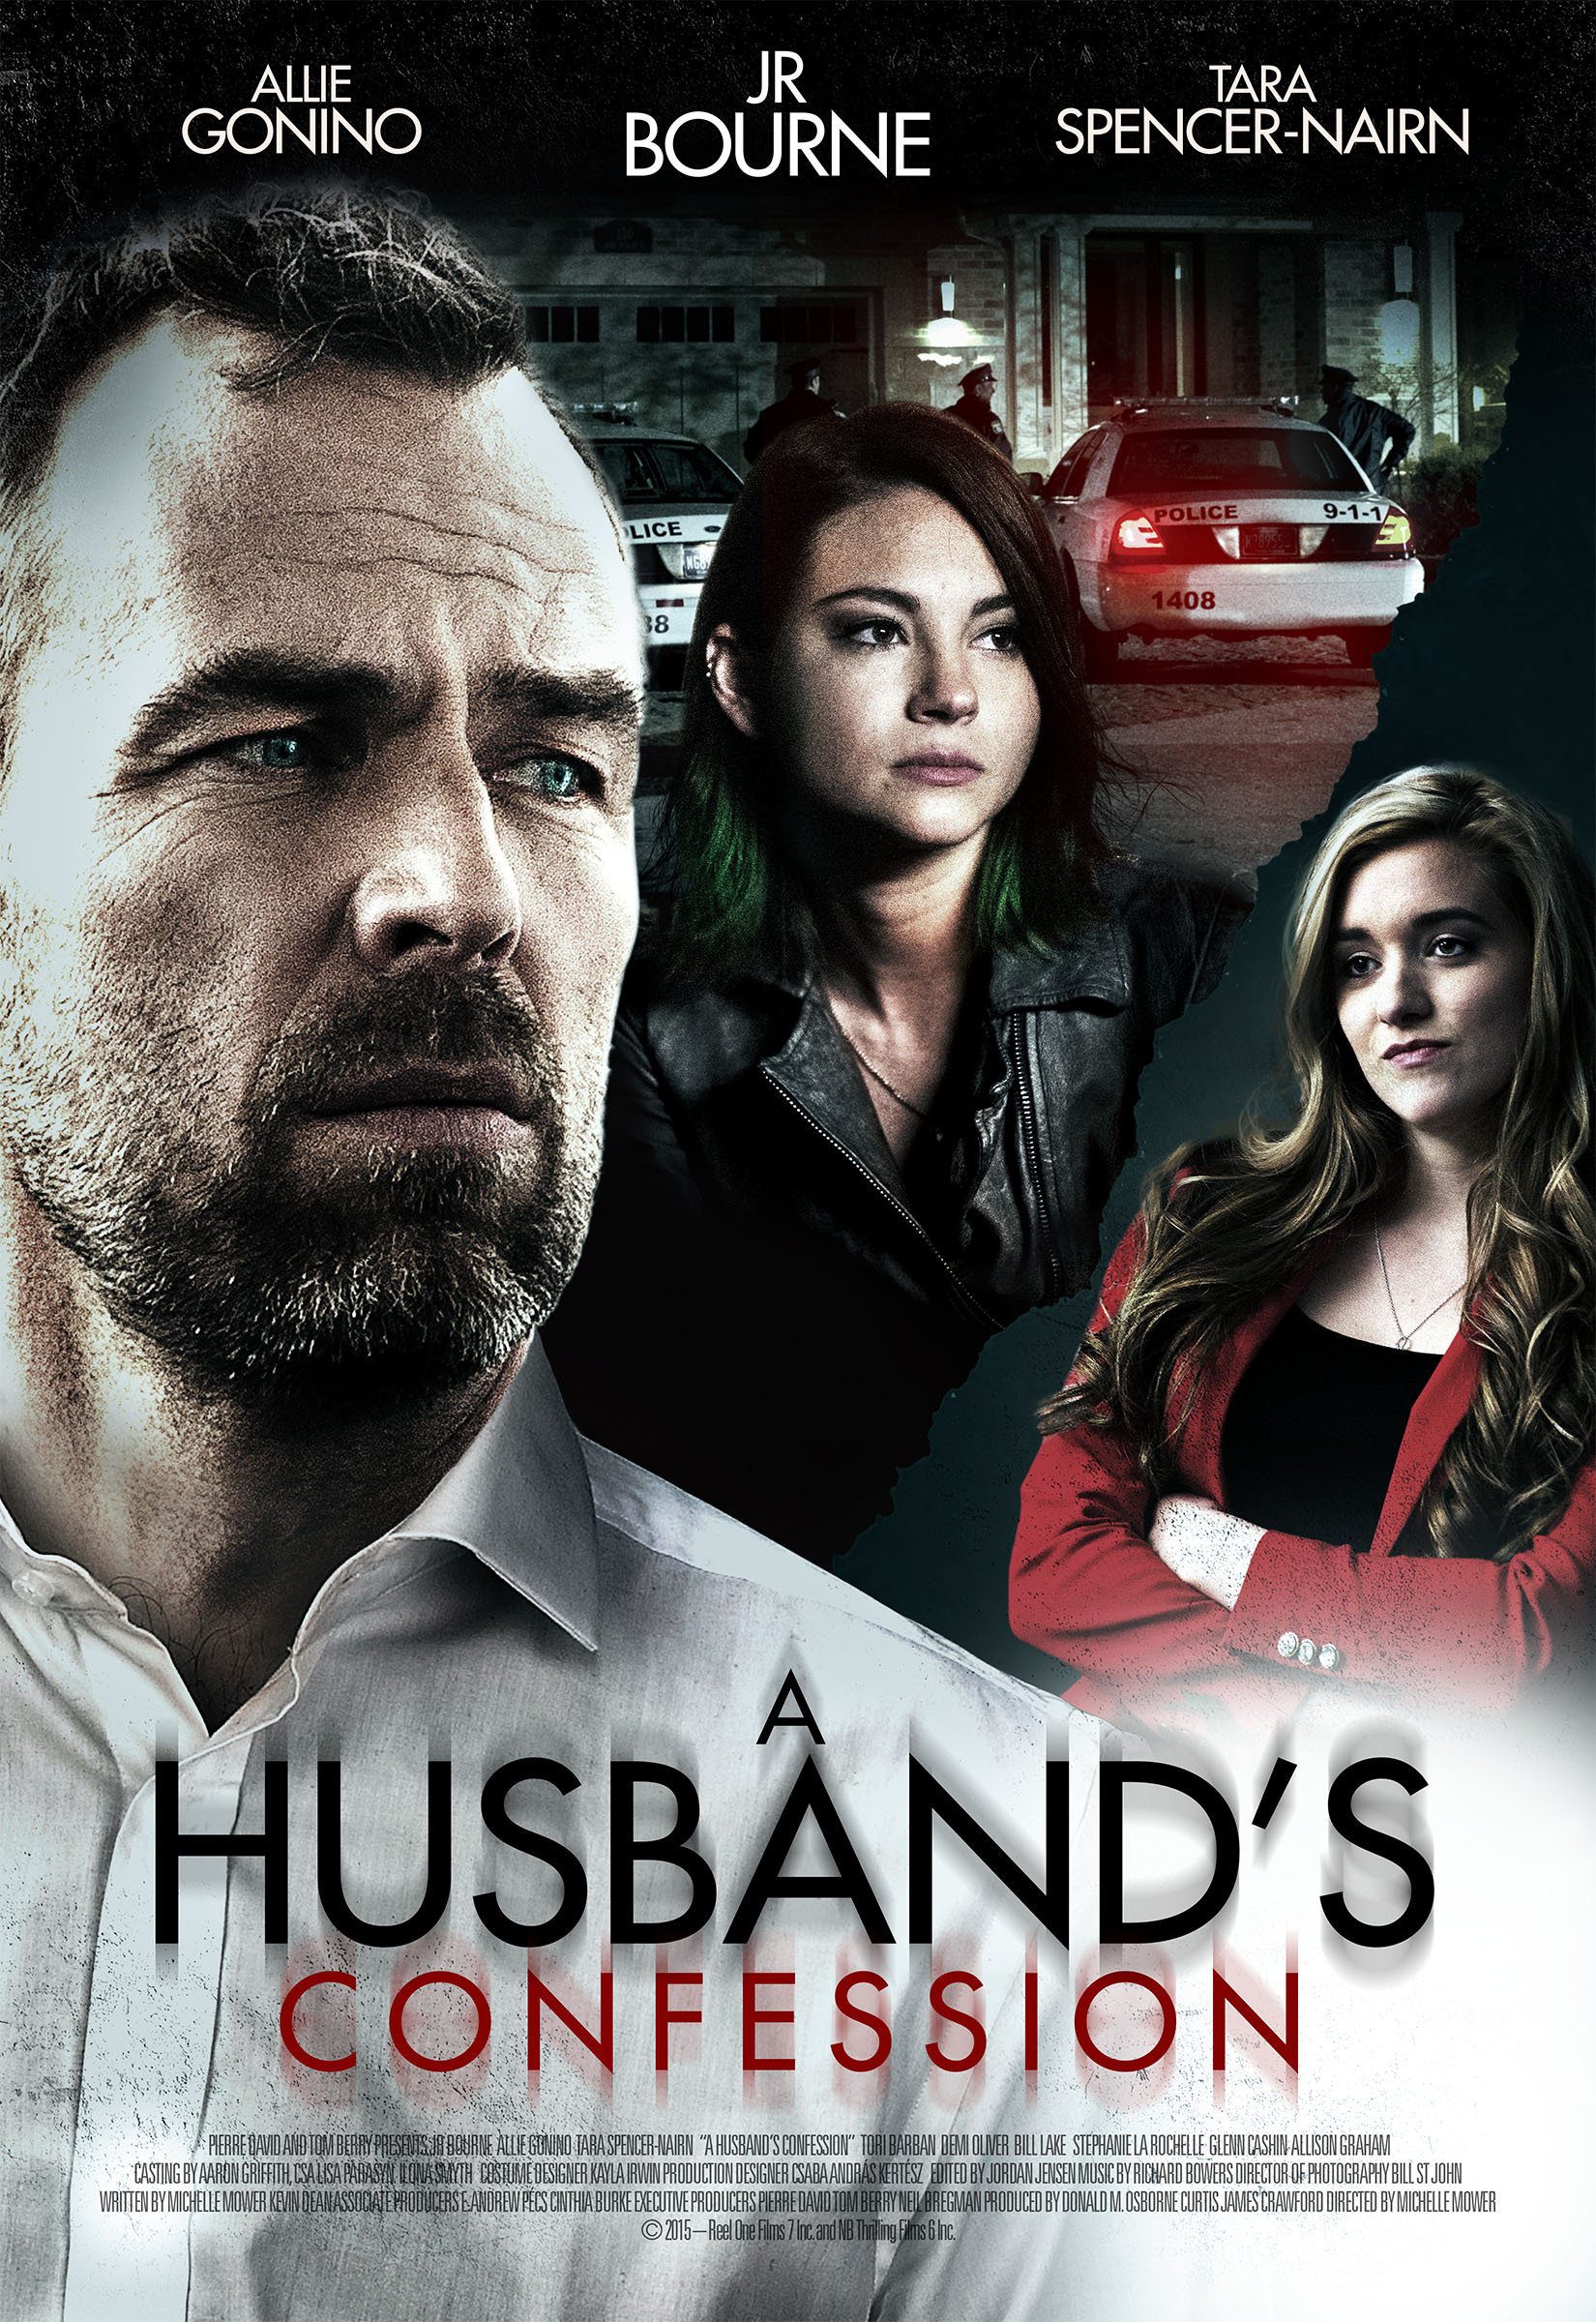 A Husband's Confession (2015) starring JR Bourne on DVD on DVD